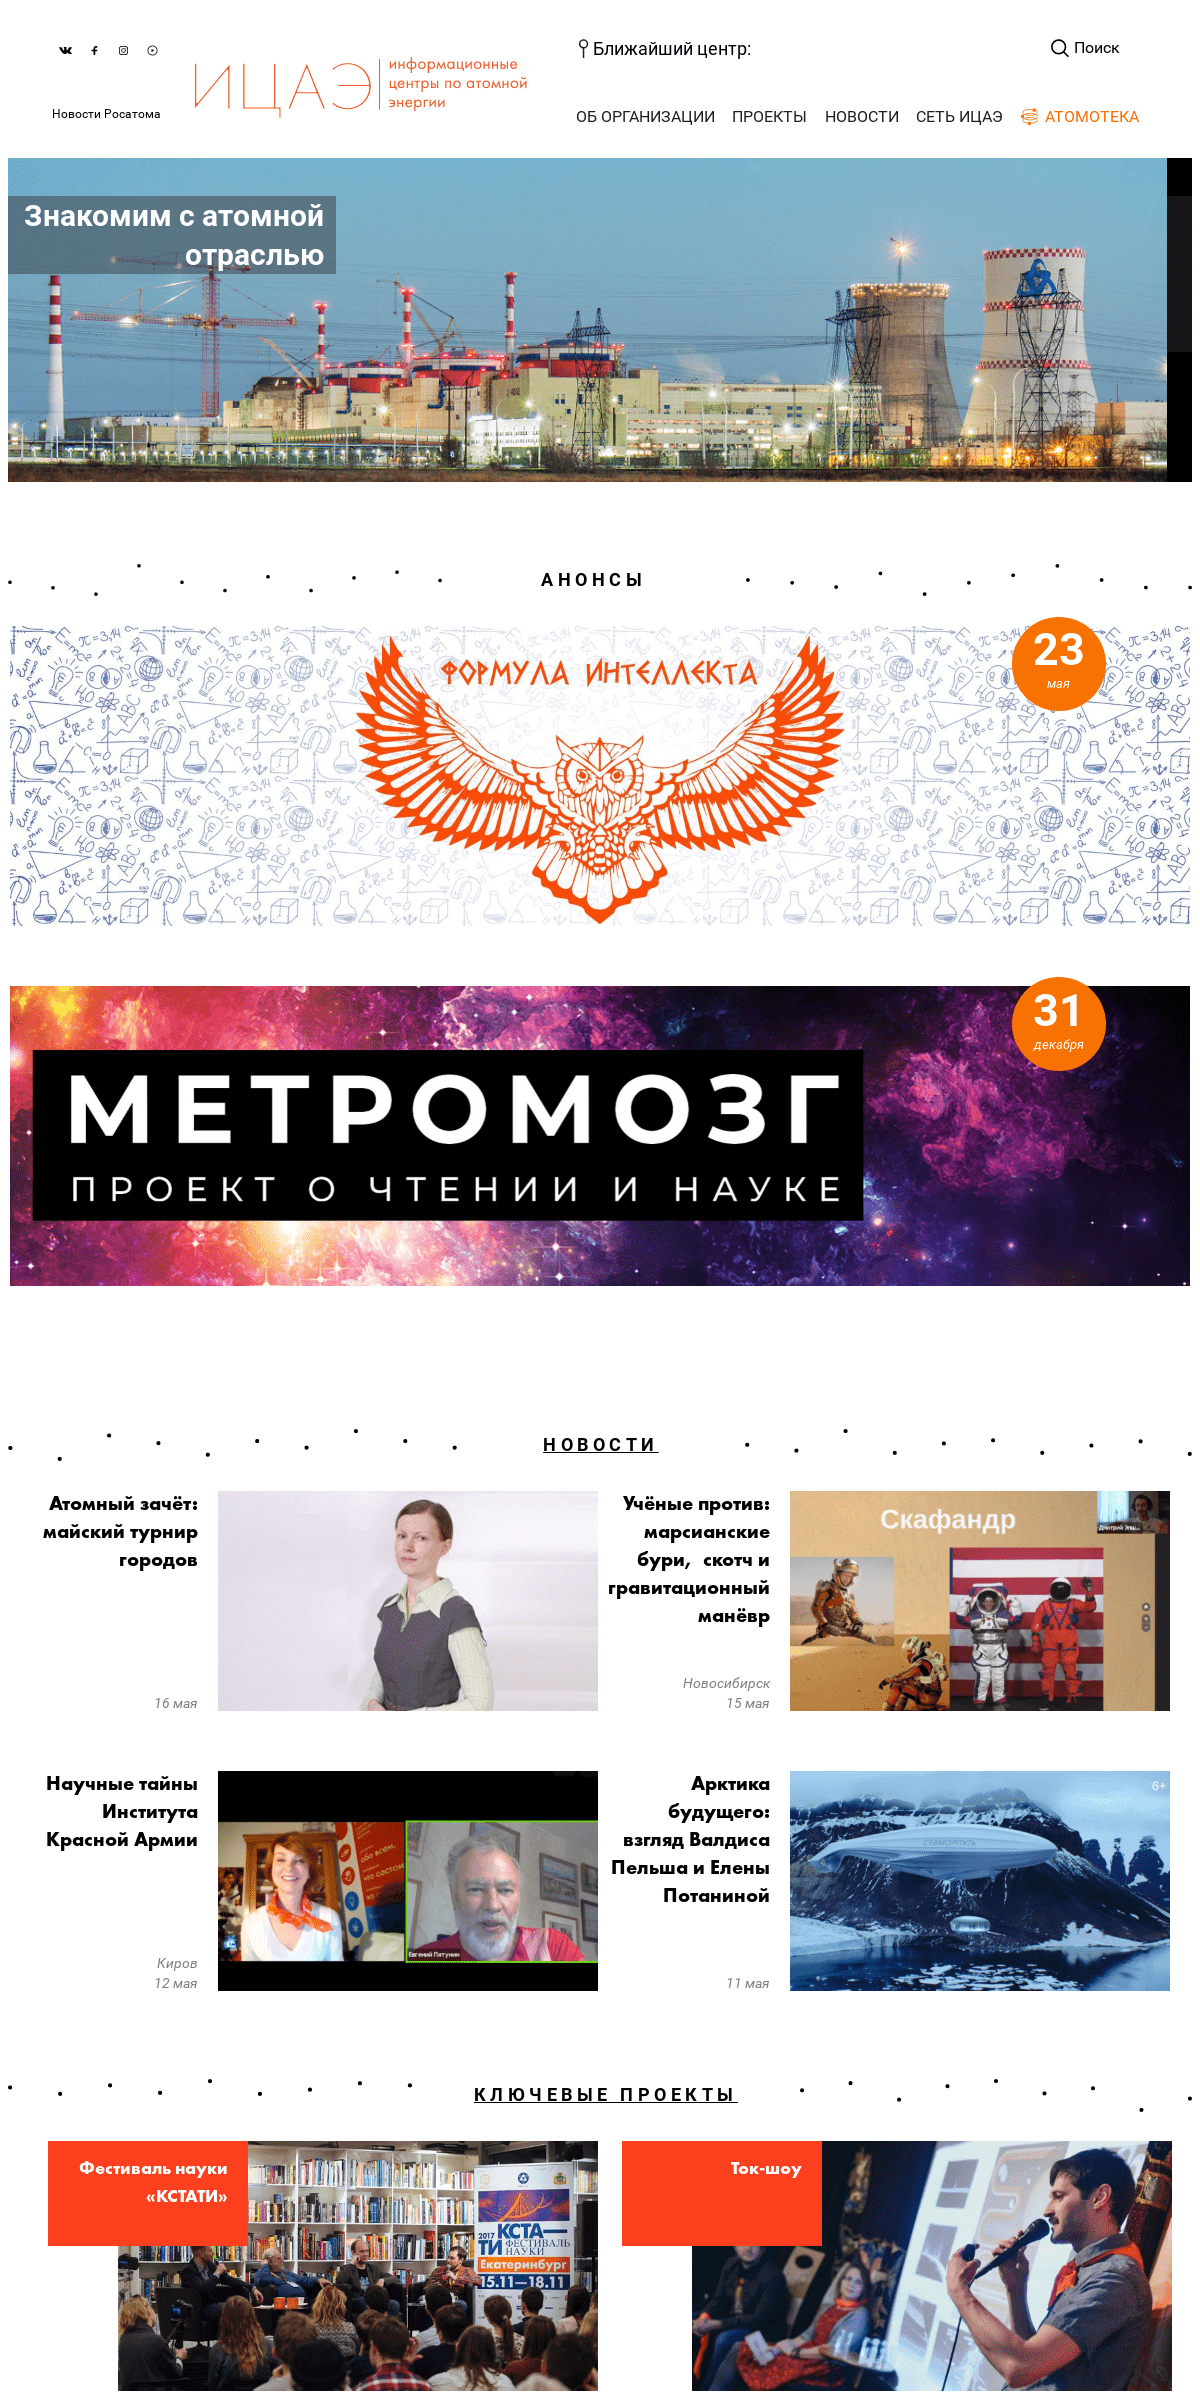 A complete backup of myatom.ru